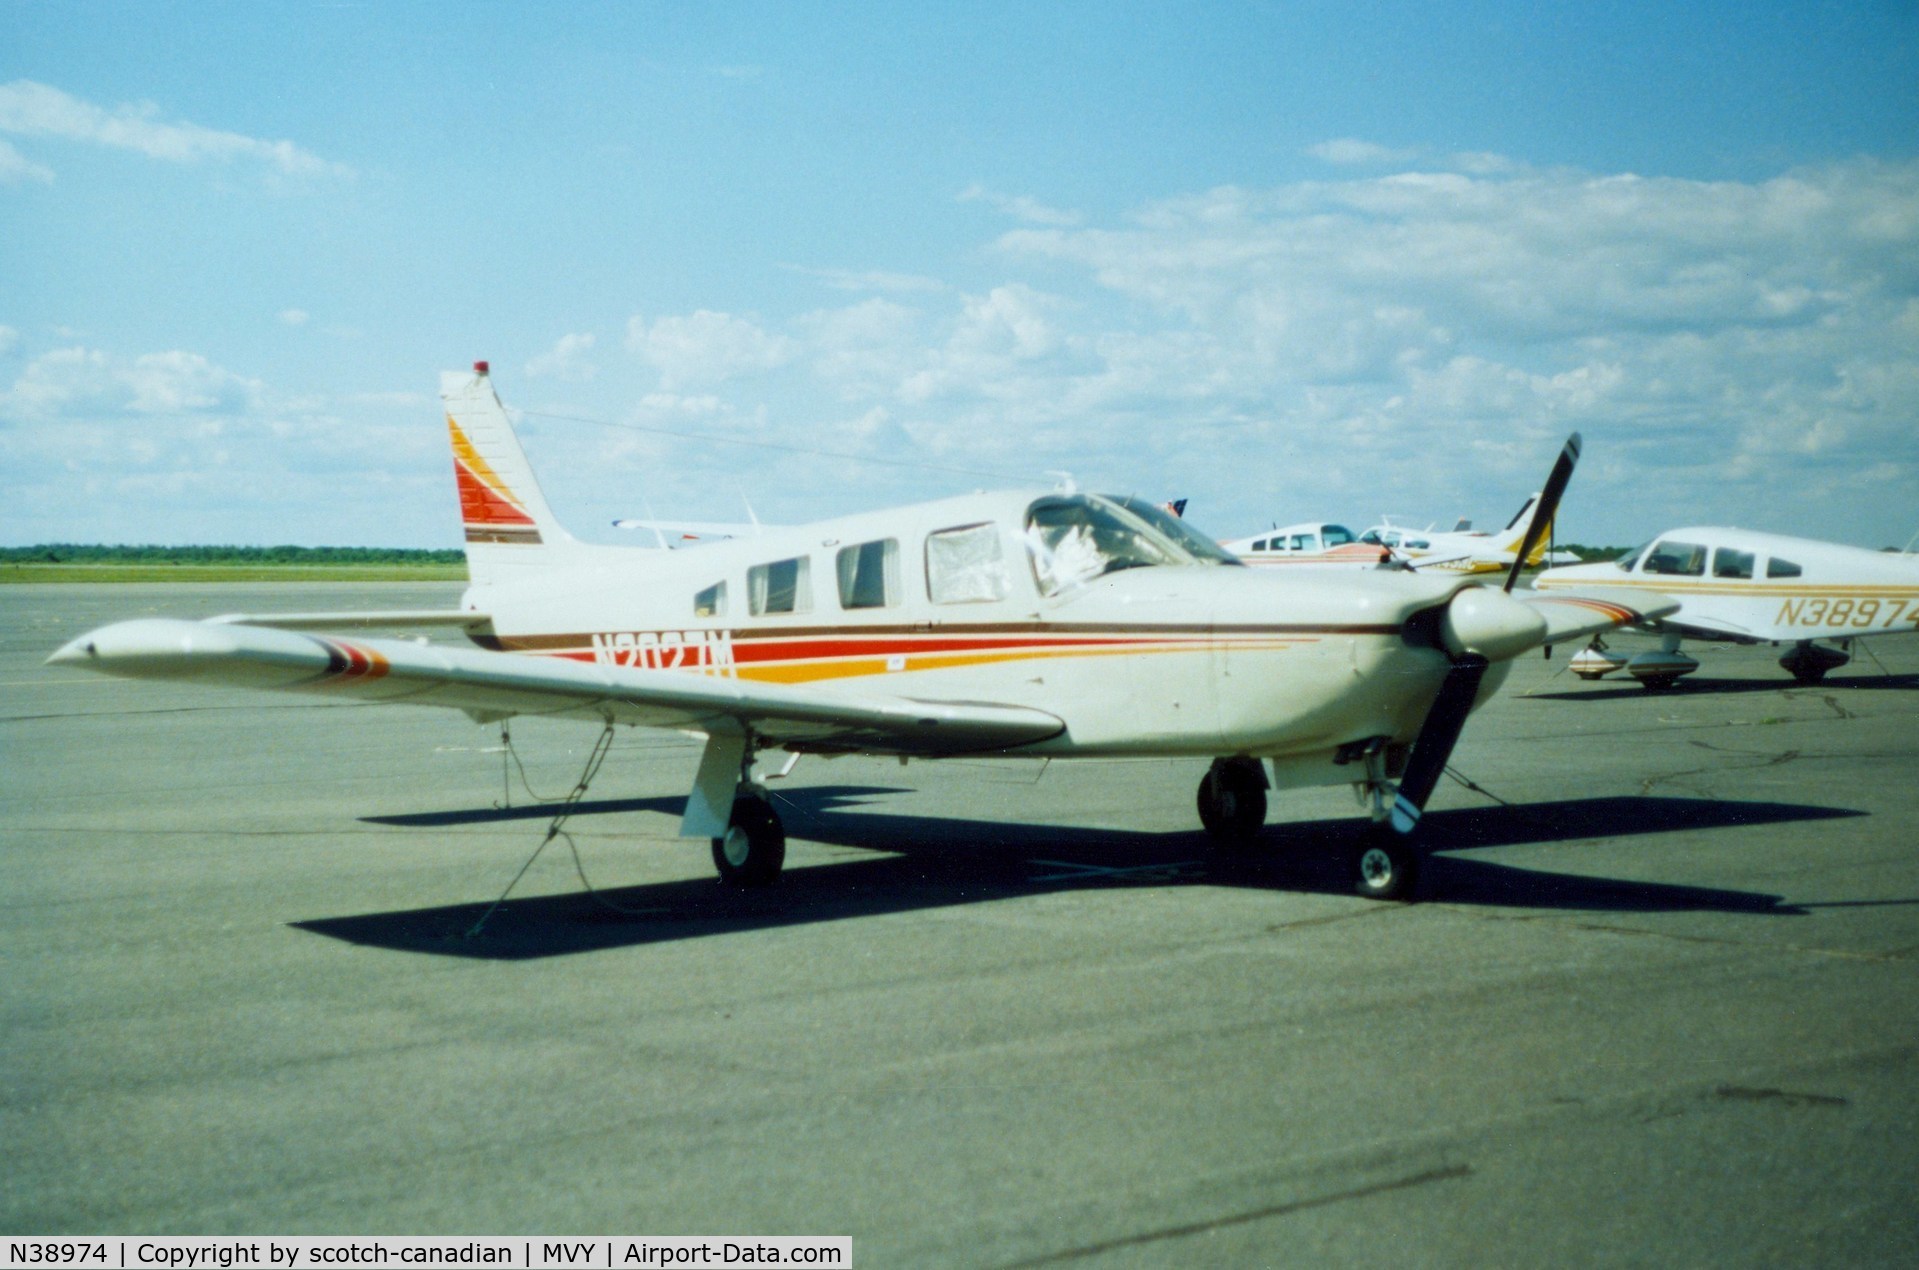 N38974, Piper PA-28-161 C/N 28-7716305, Piper PA-28-161 N38974 in background at Martha's Vineyard Airport, Vineyard Haven, MA - July 1986